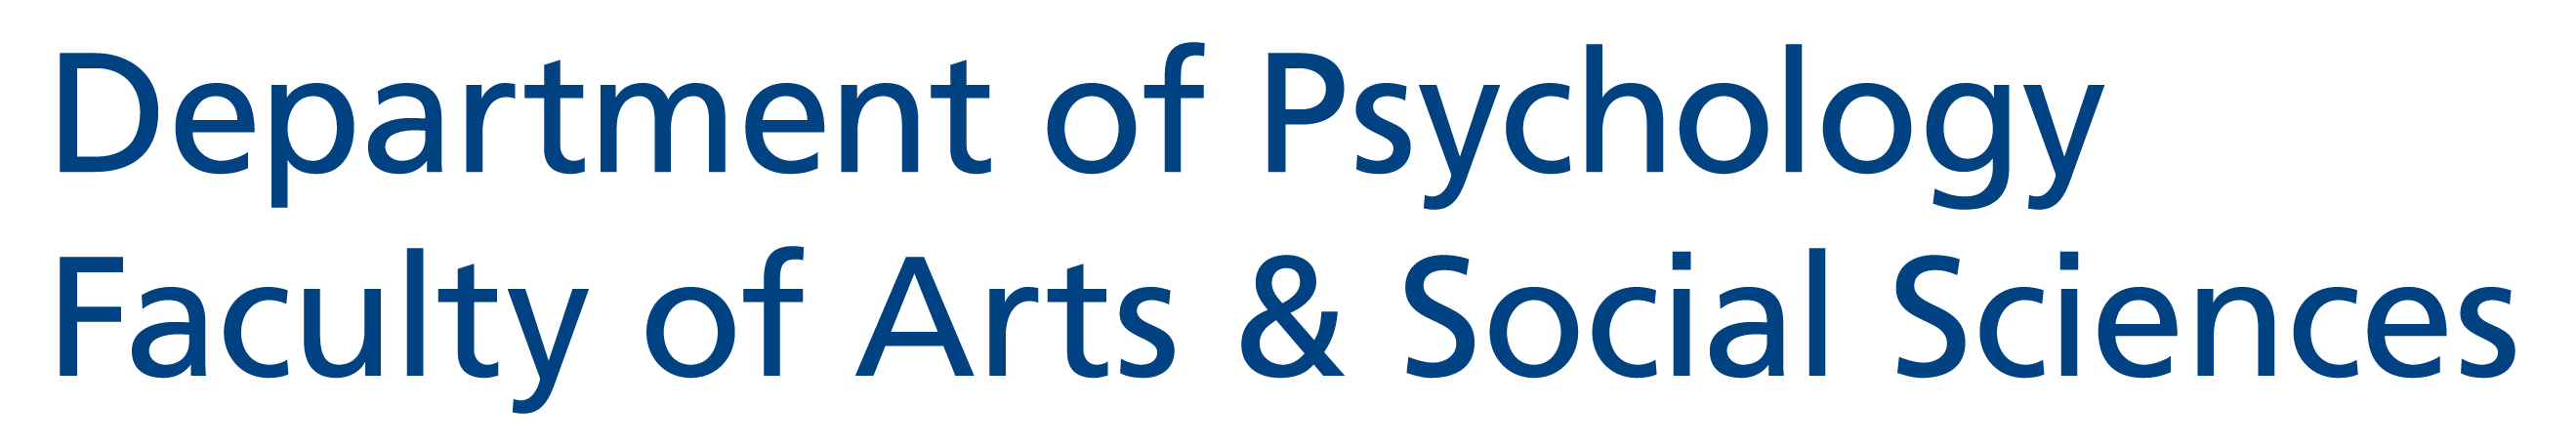 NUS - Department of Psychology